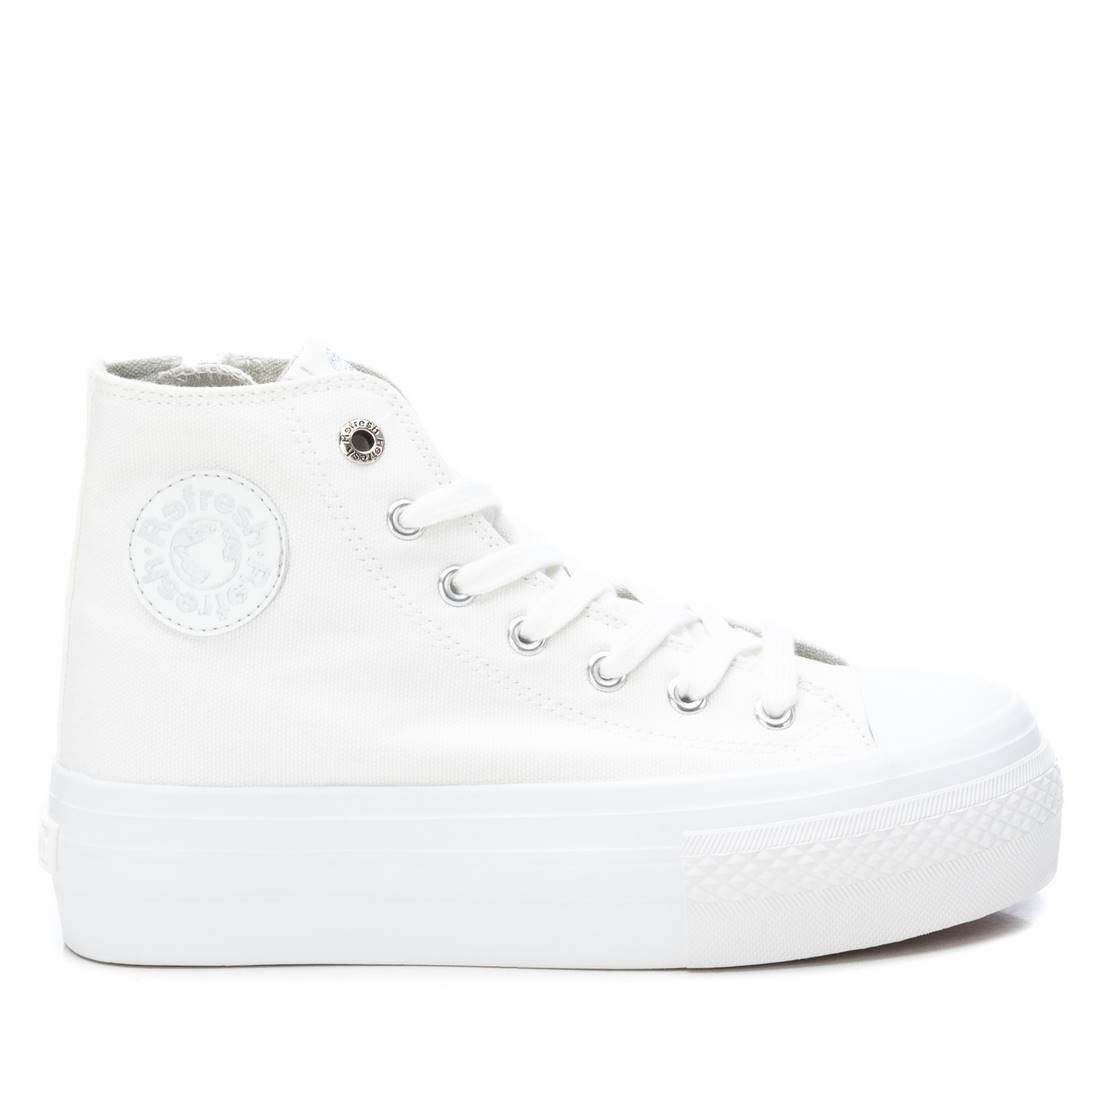 Sneaker Refresh 170836 - blanco-plata - 